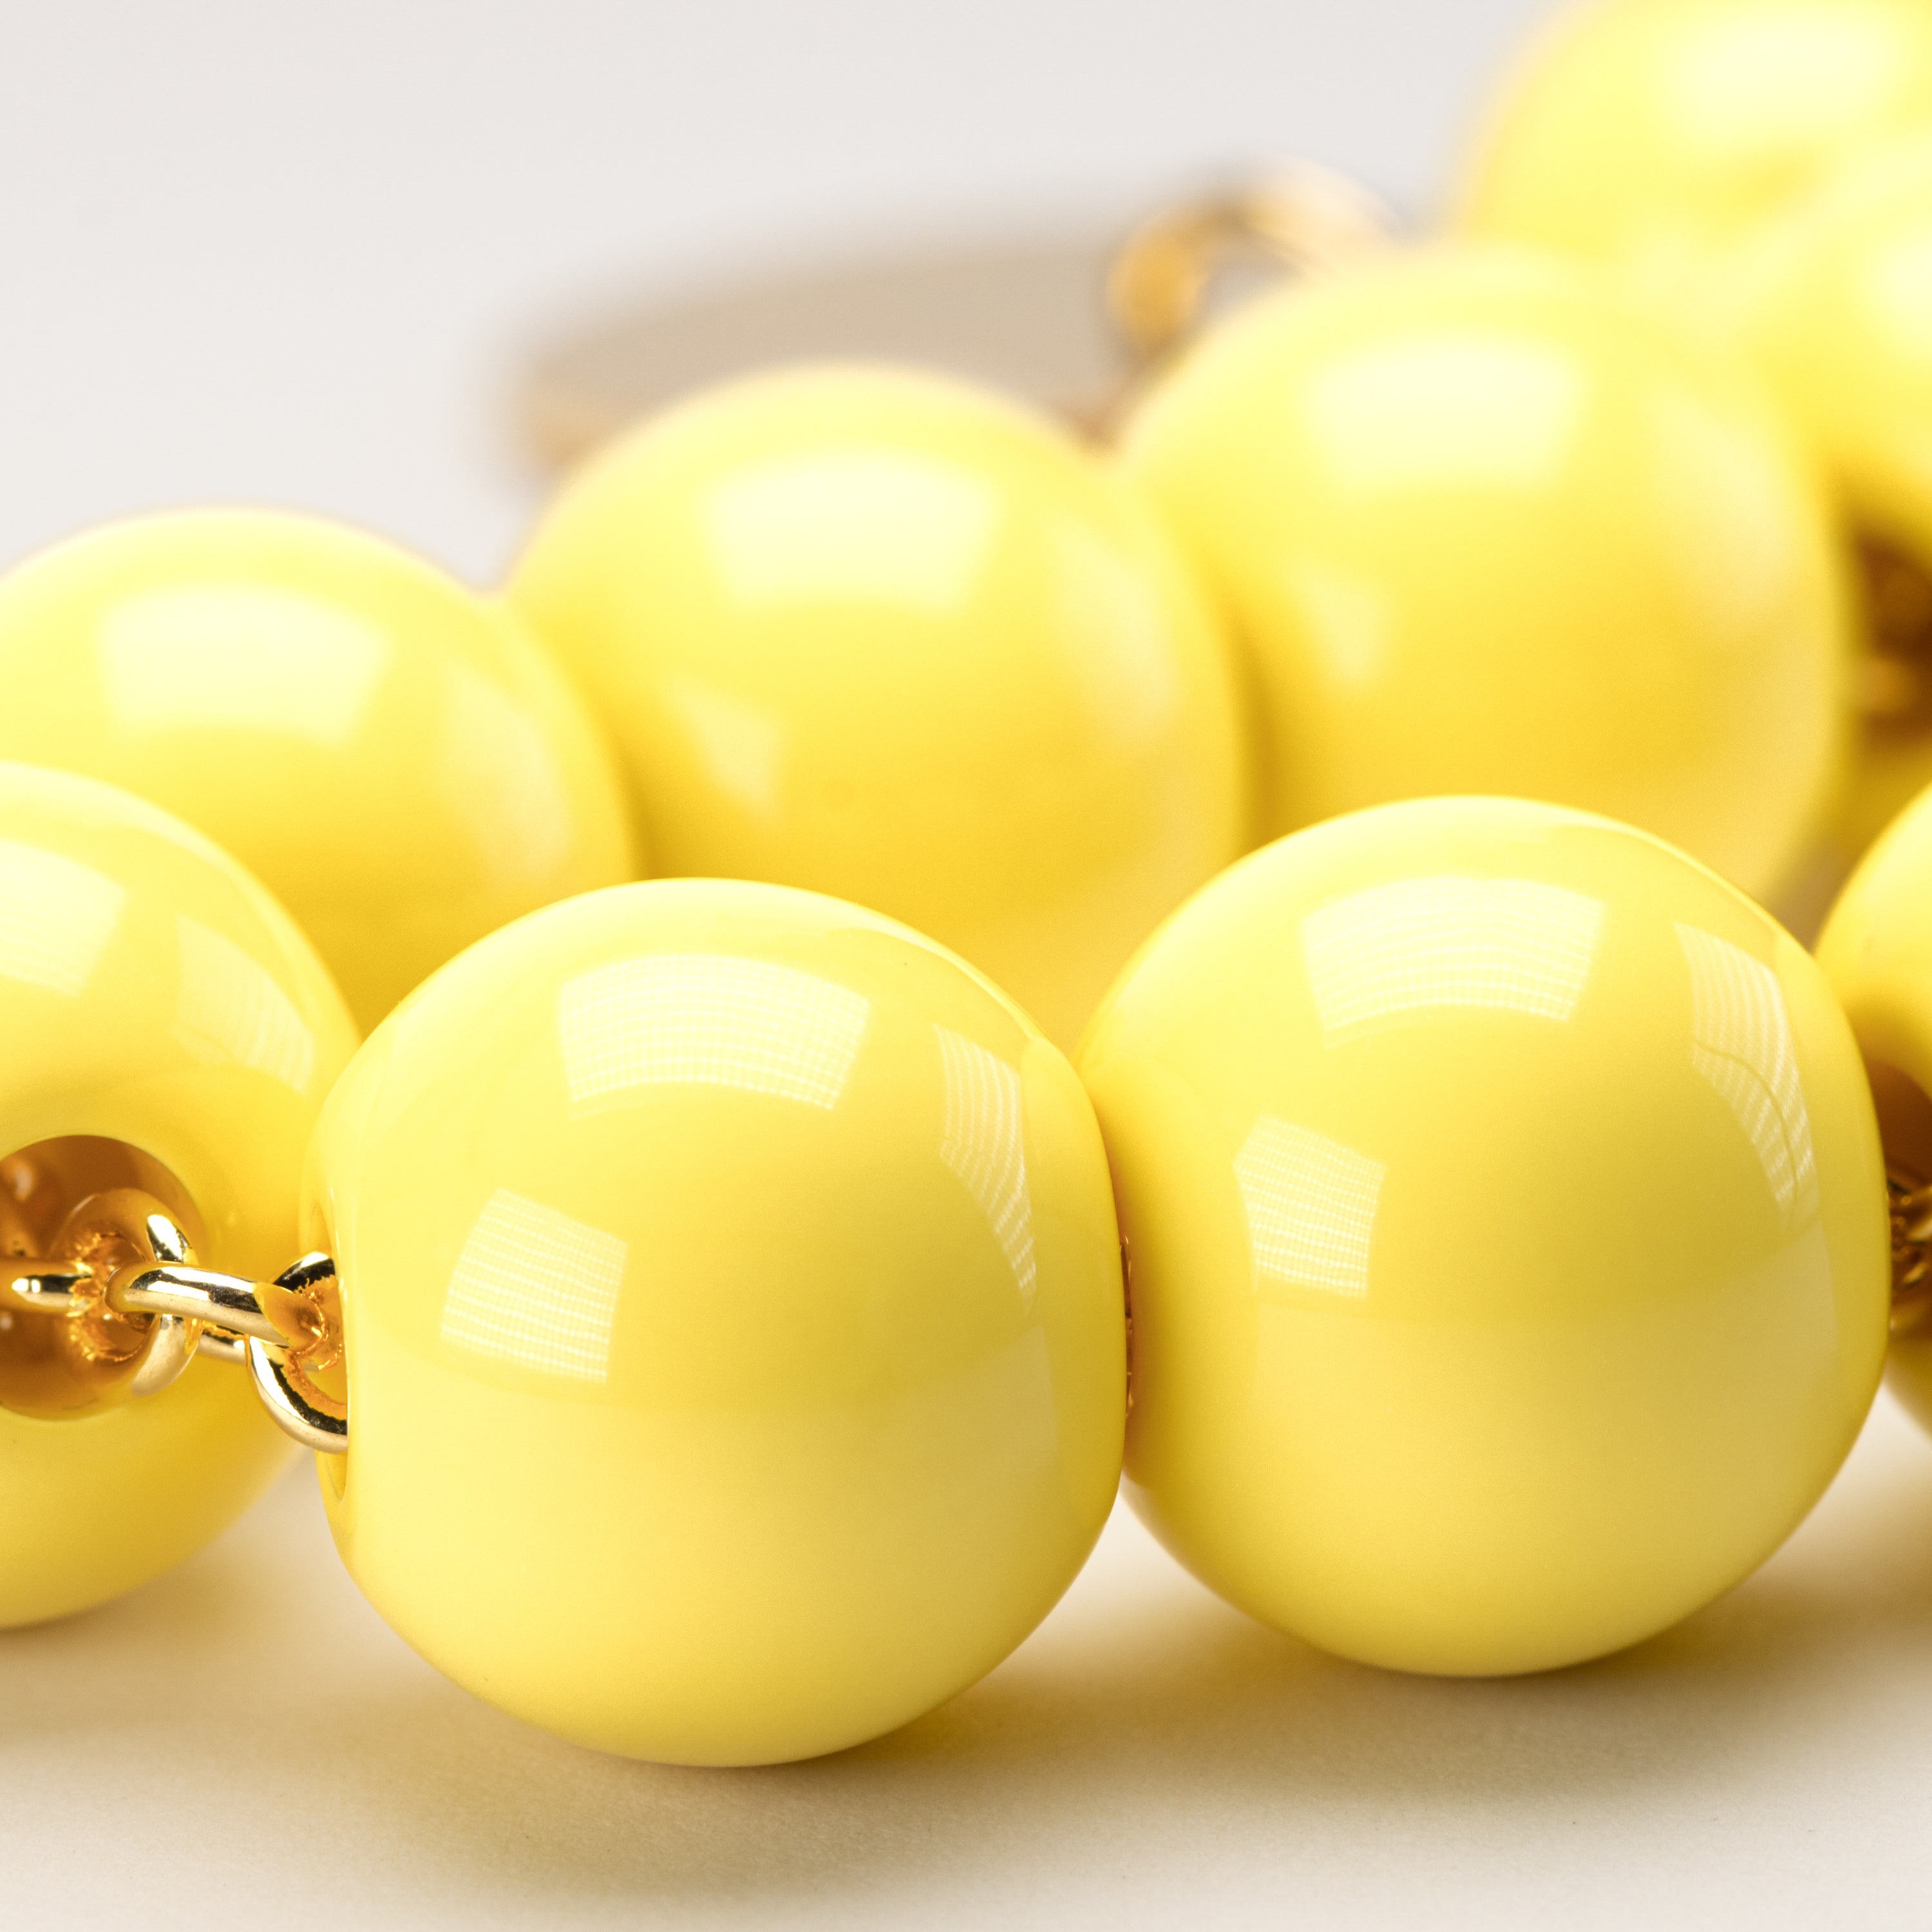 Bracelet - Beads yellow HOLO